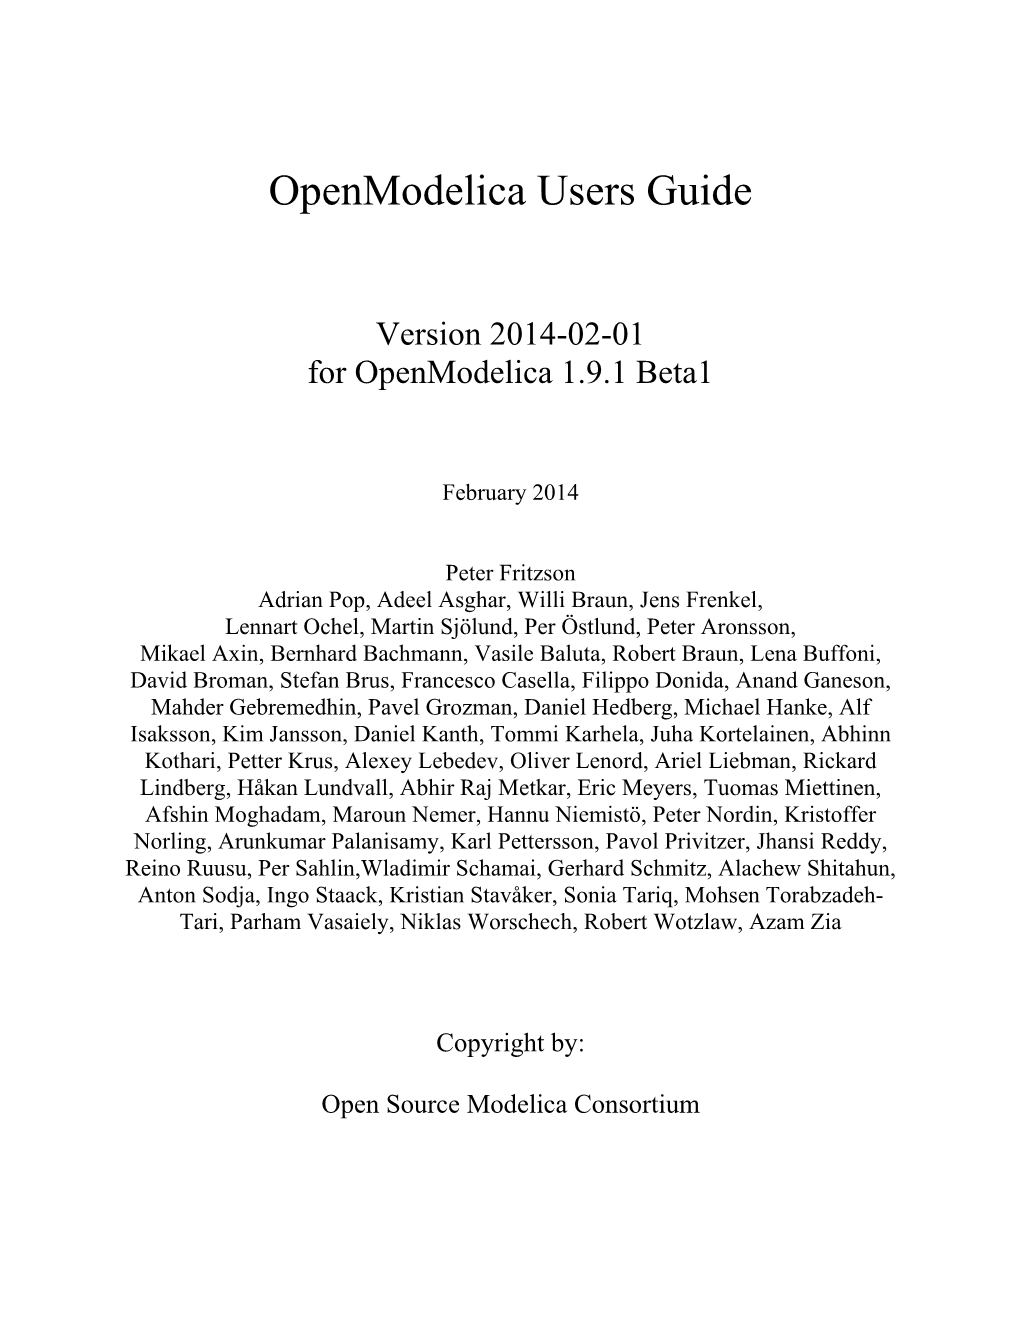 Openmodelica System Documentation